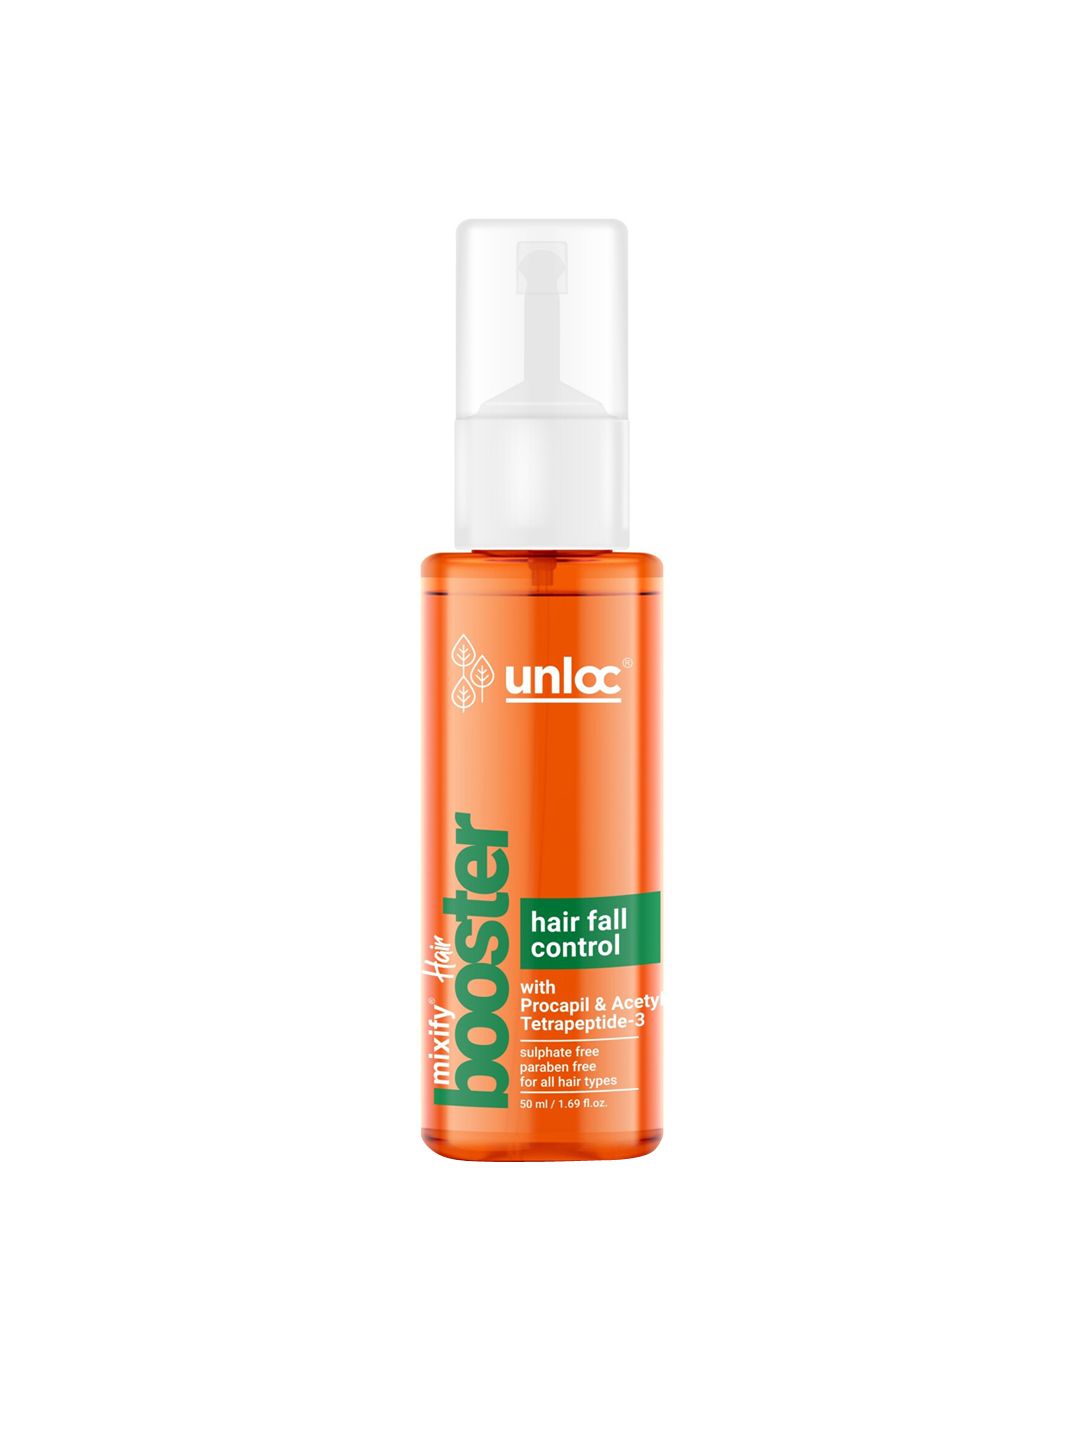 Unloc Mixify Hairfall Control Hair Booster Hair Oil 50 ml Price in India